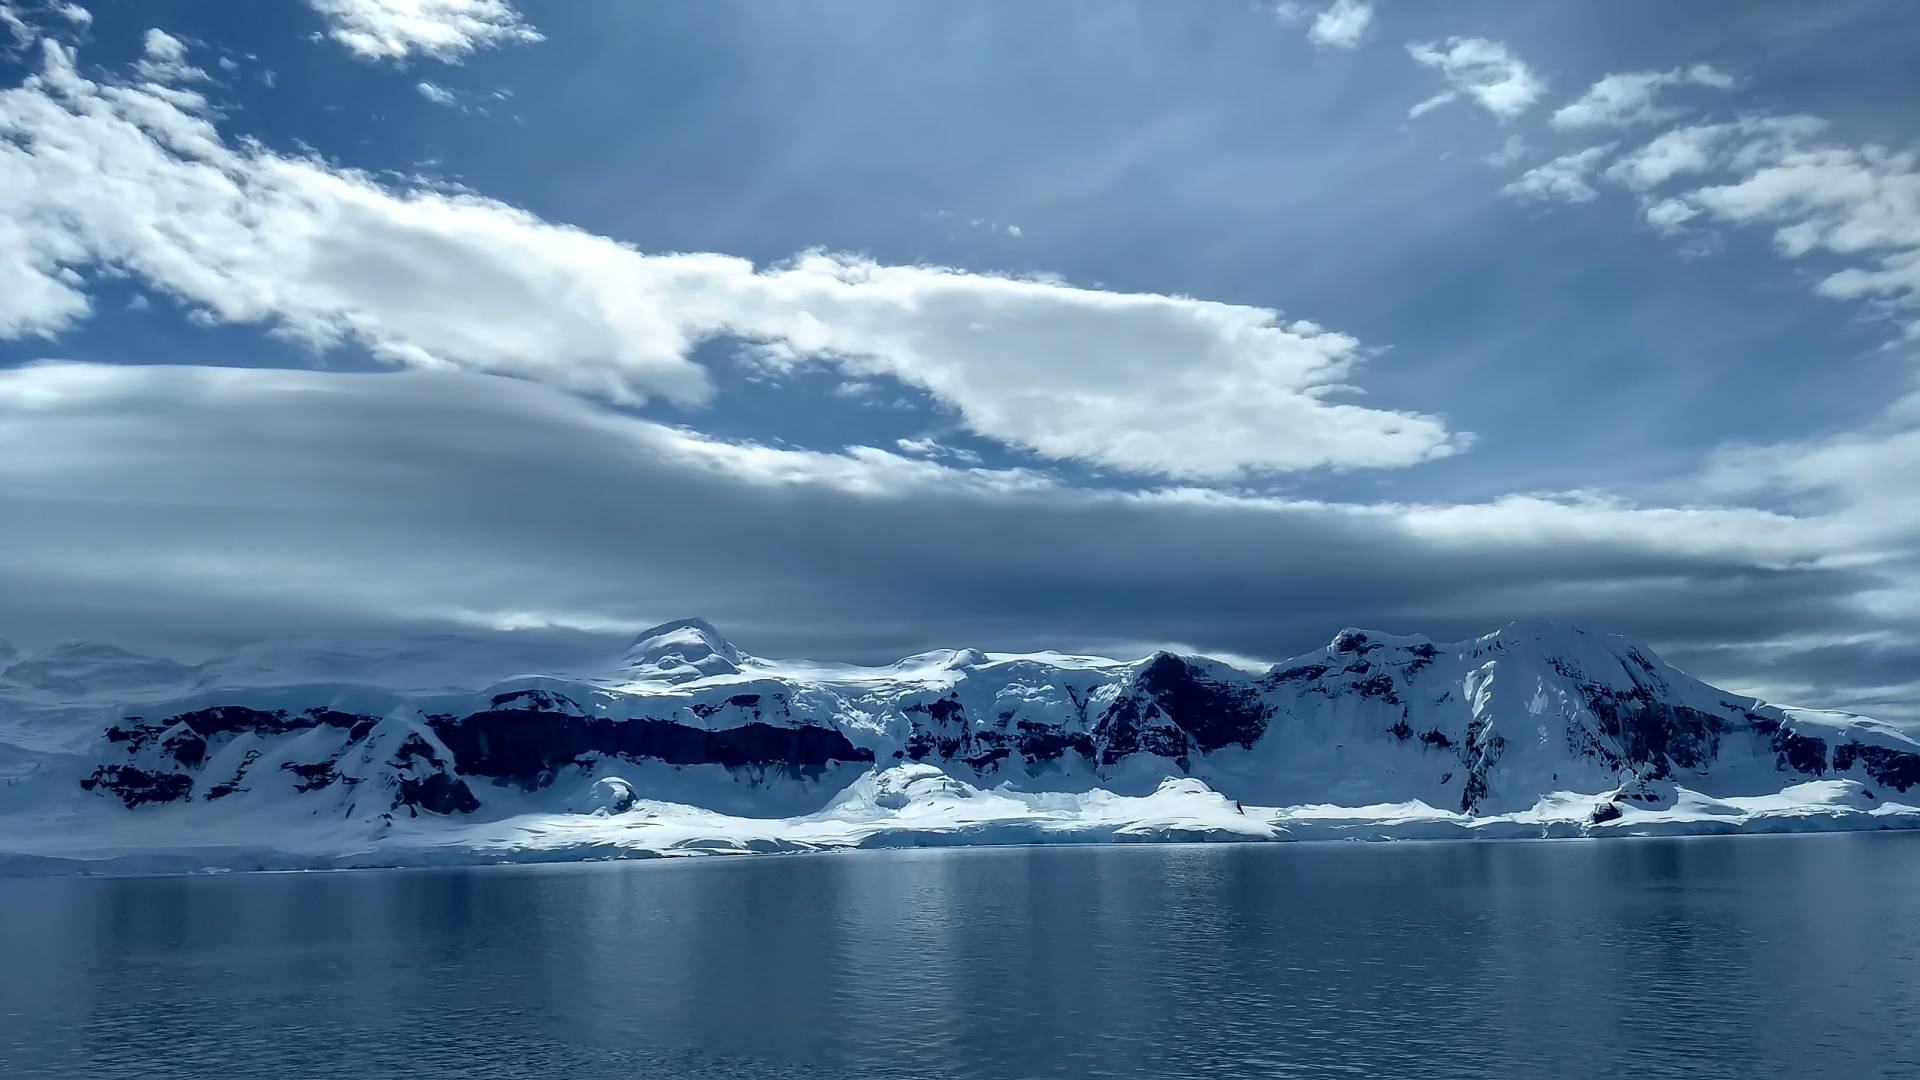 otok-king-george-island-antarktika-shutterstock.jpg